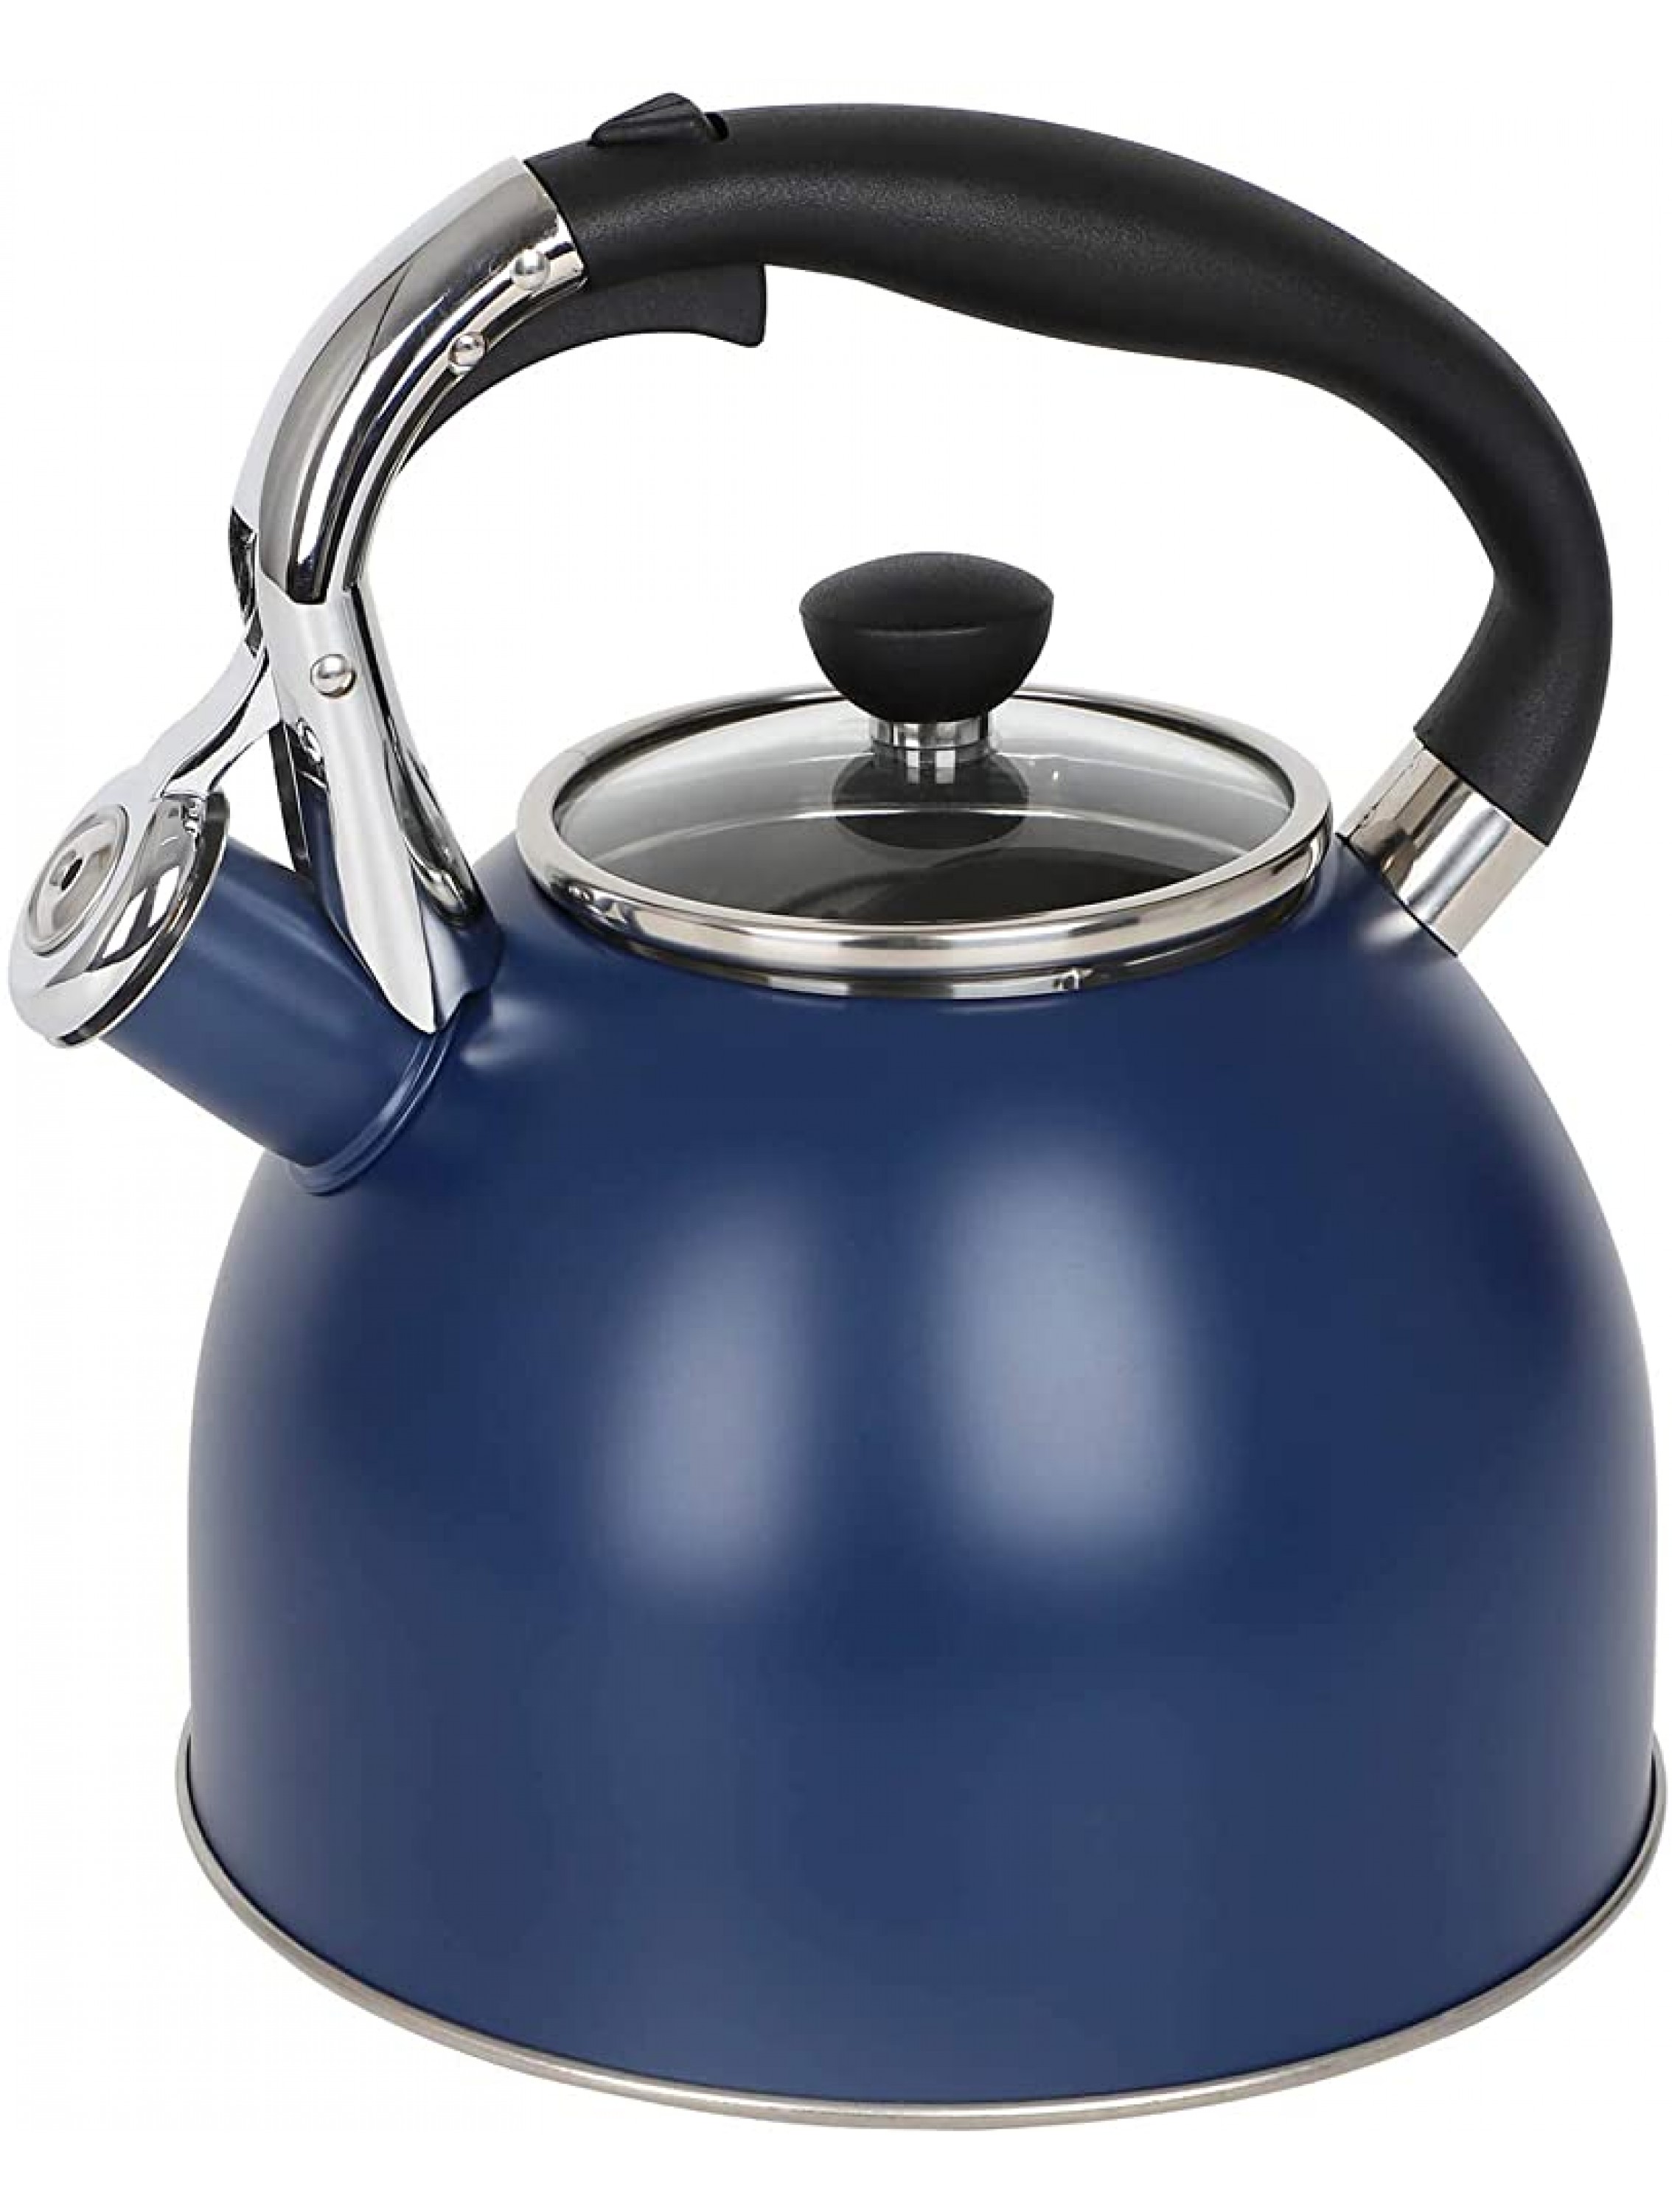 Rorence Stainless Steel Whistling kettle: 2.6 Quart with Capsule Bottom & Heat-resistant Glass Lid – Navy Blue - BNDJIBARI